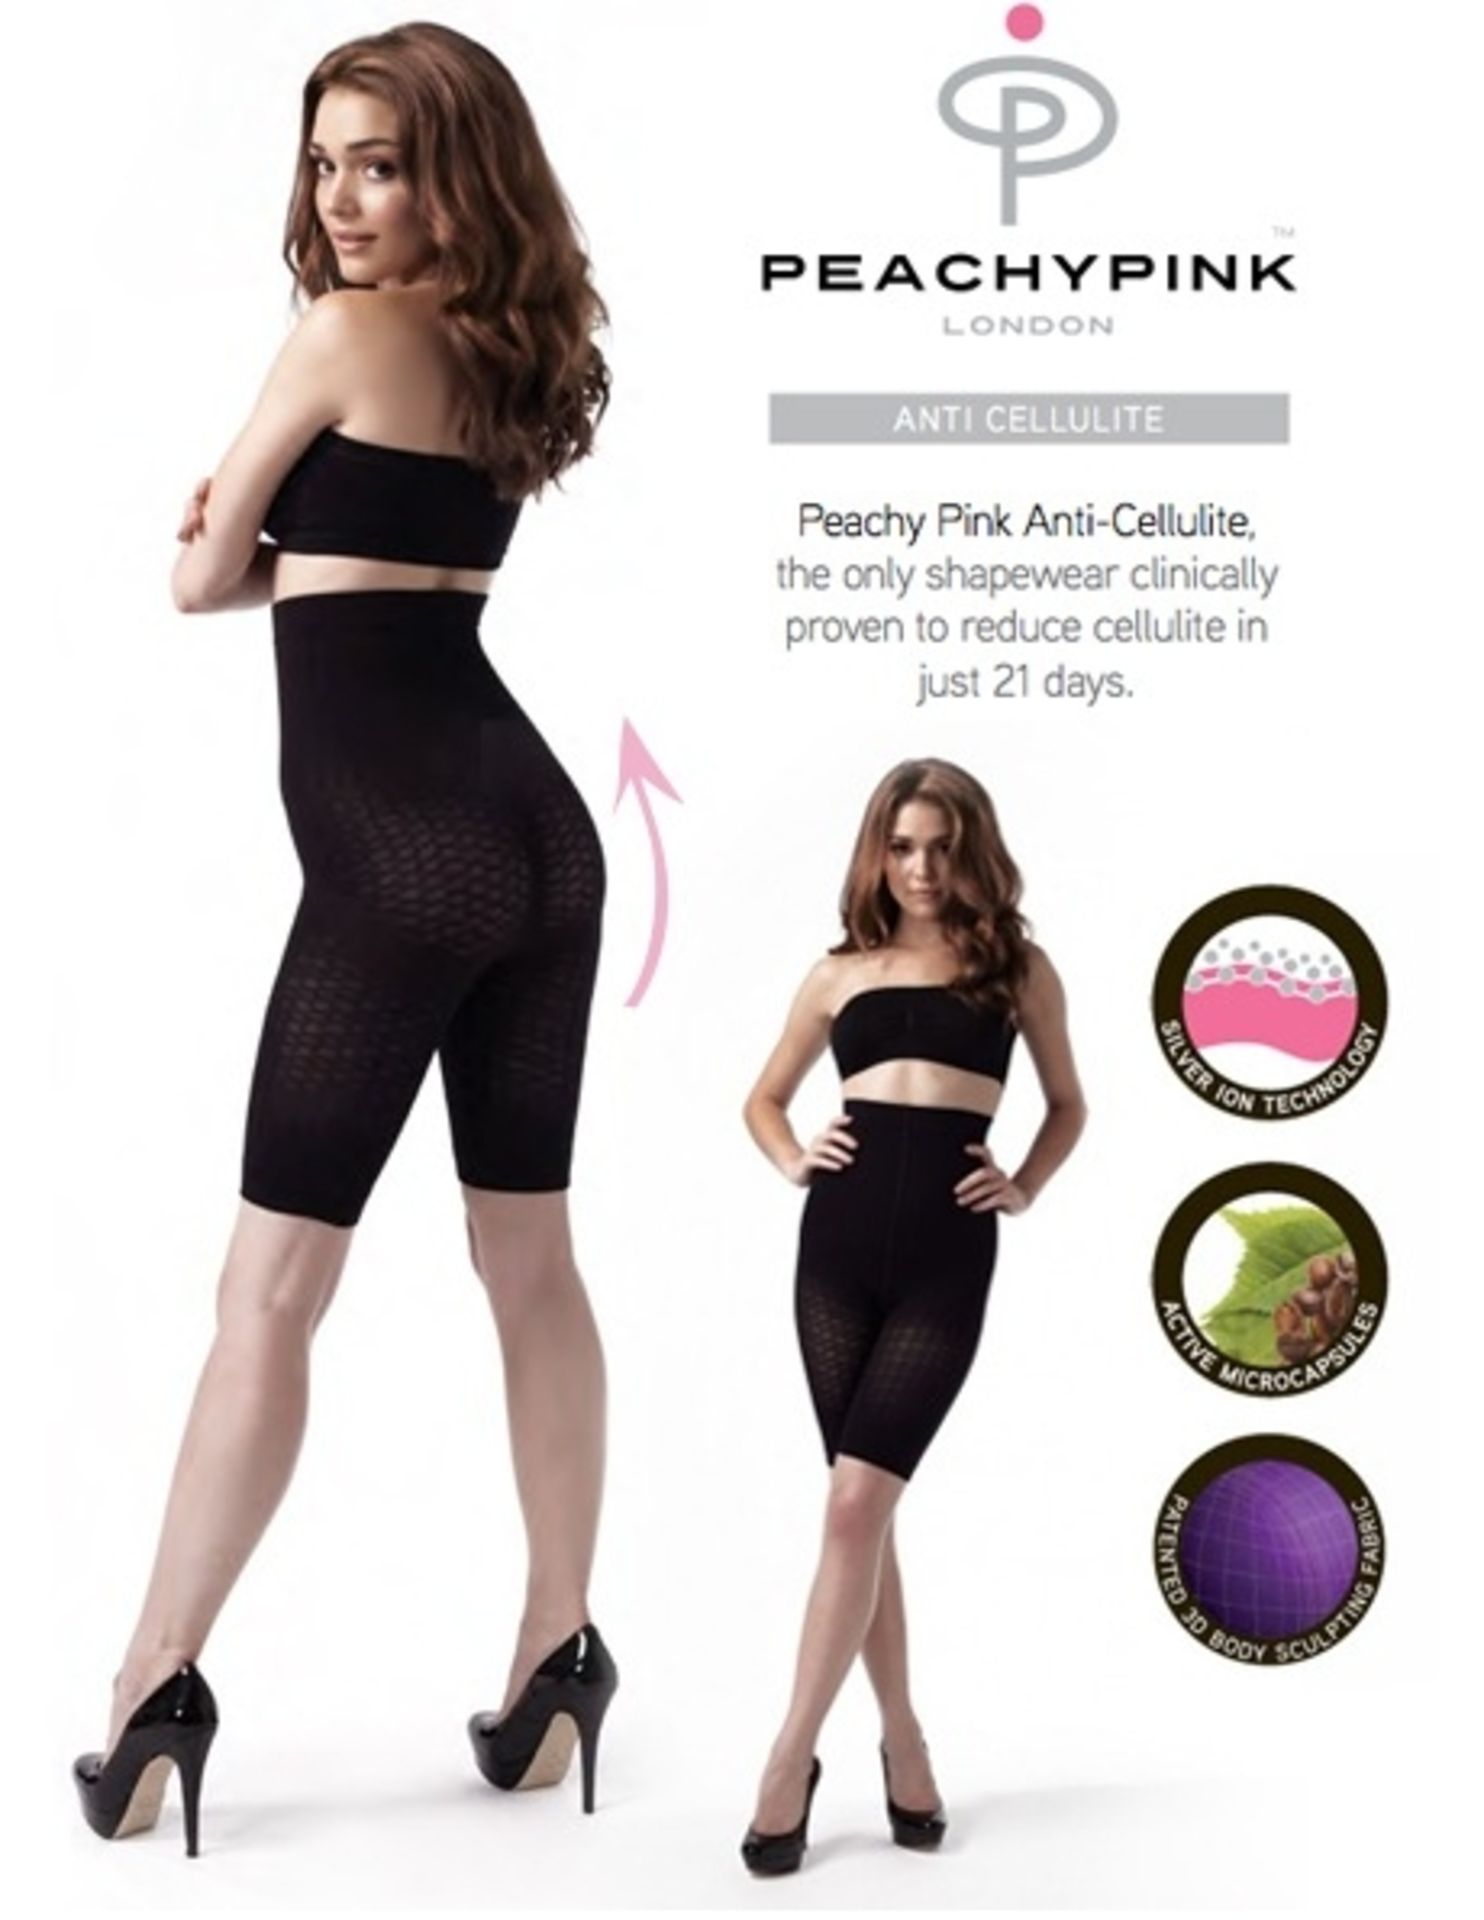 10 x Peachy Pink Anti-Cellulite Slimming Pants - Amazon 14.